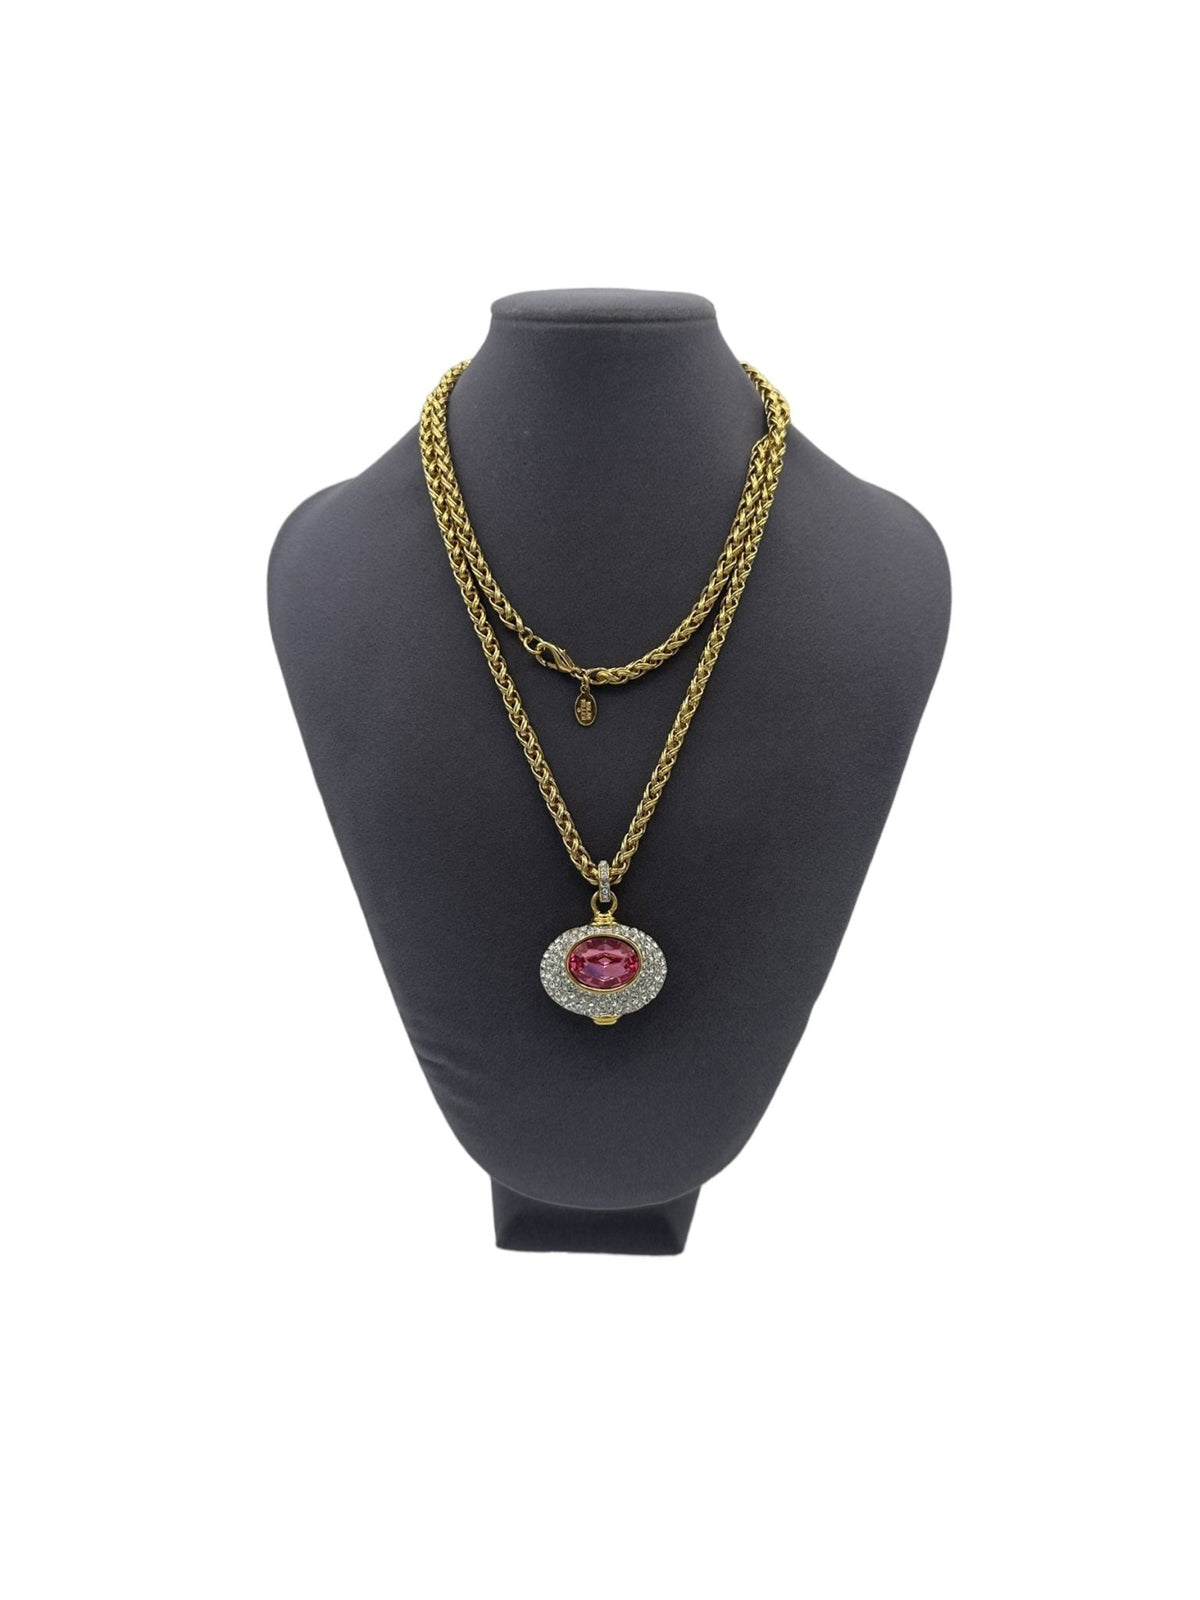 Nolan Miller Large Pink Crystal Goddess Necklace Reversible Pendant - 24 Wishes Vintage Jewelry